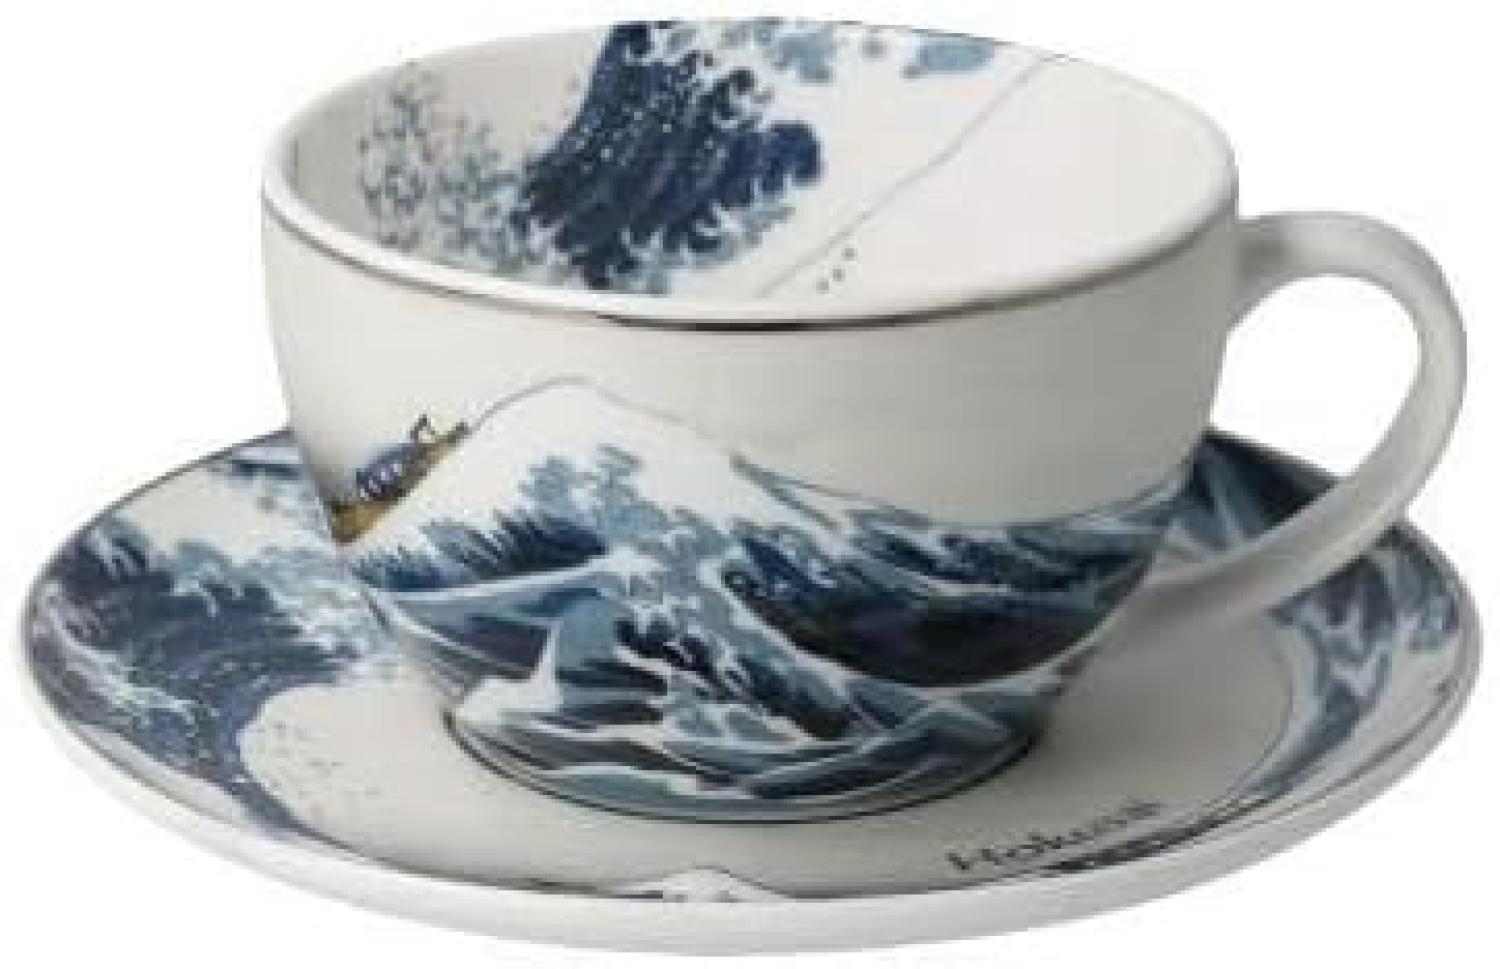 Goebel Artis Orbis Katsushika Hokusai Die Welle - Tee-/Cappuccinotasse Neuheit 2020 67012521 Bild 1